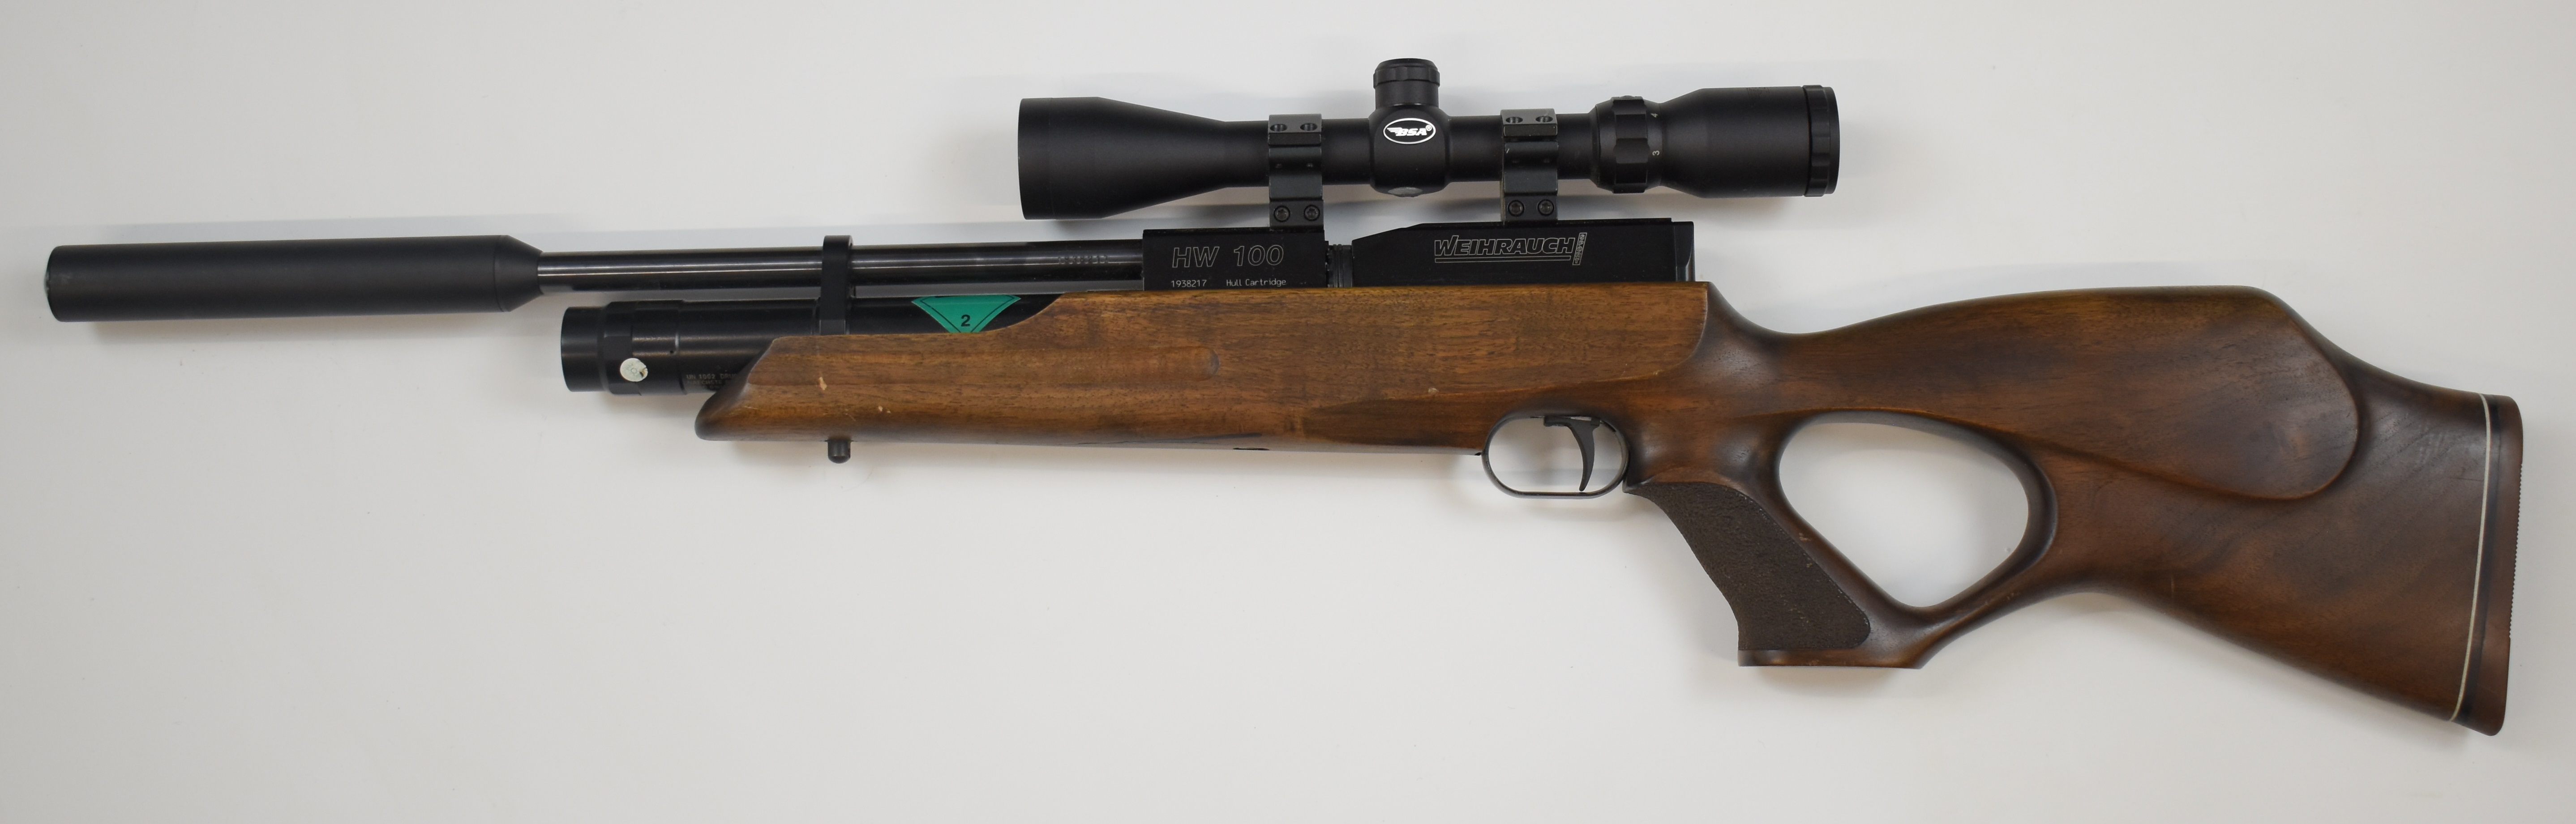 Weihrauch HW100 .22 PCP air rifle with textured semi-pistol grip, raised cheek piece, adjustable - Image 6 of 11